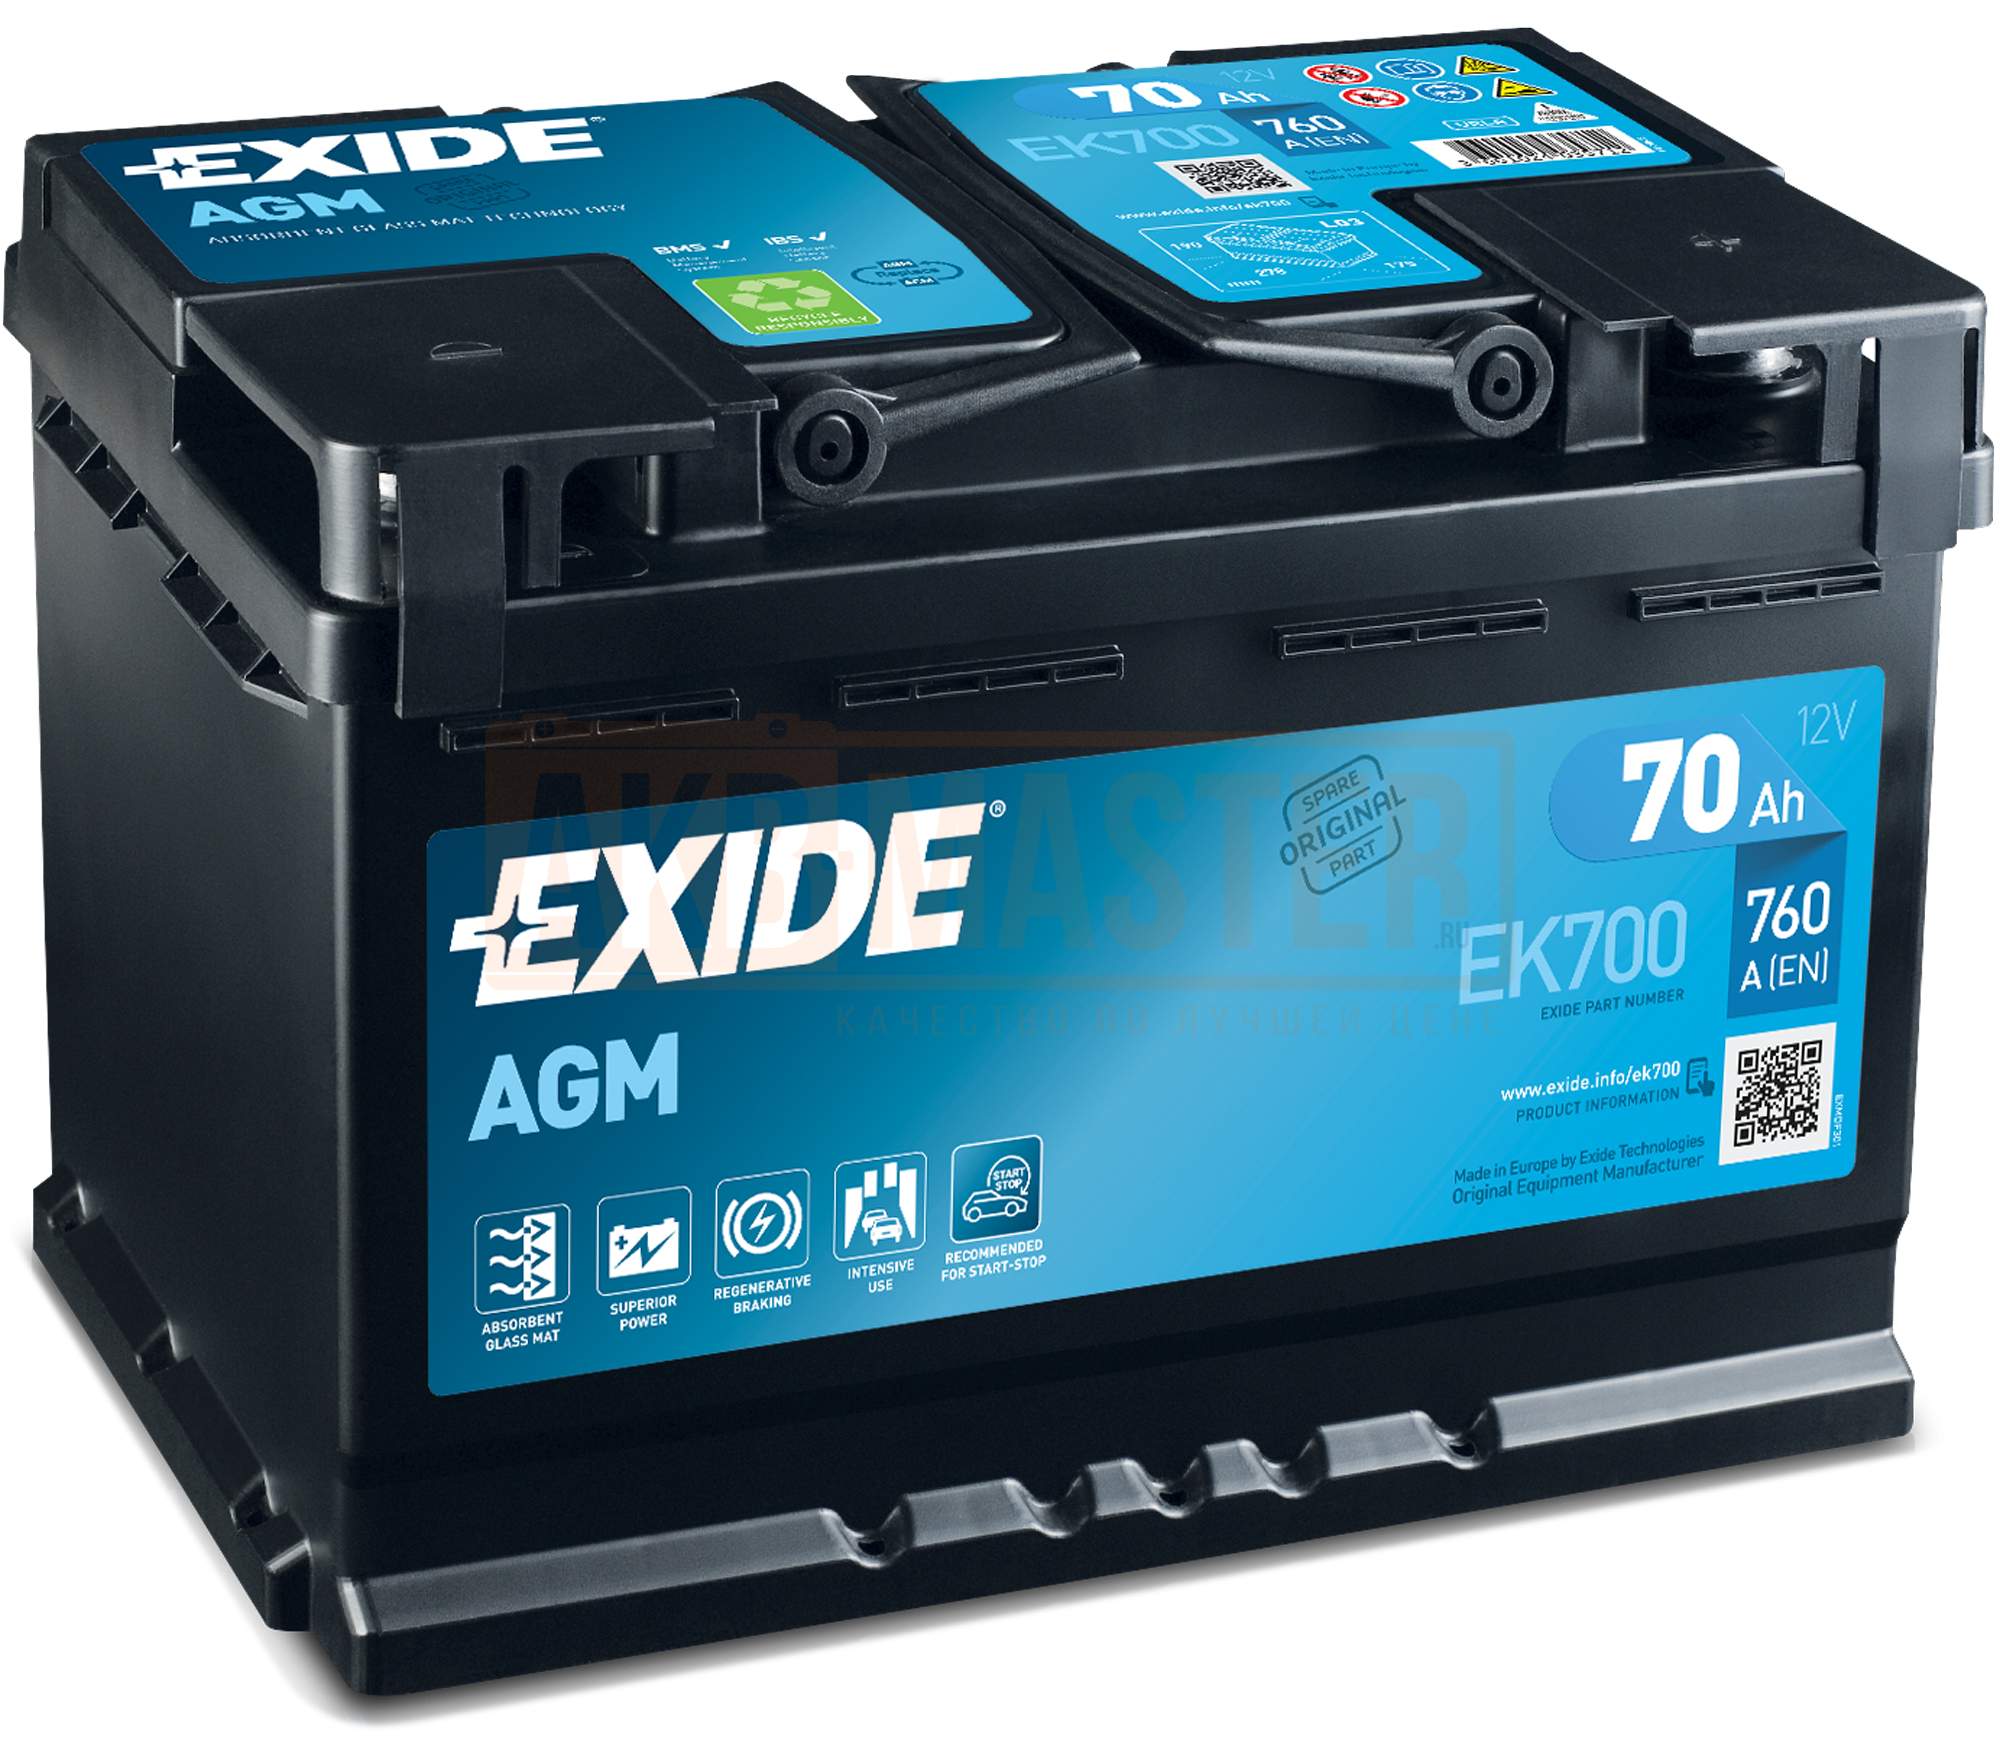 Exide el700 аккумулятор. Exide start-stop AGM ek700. Аккумулятор Exide Excell eb604. Аккумулятор Exide AGM 70ah. Exide start agm